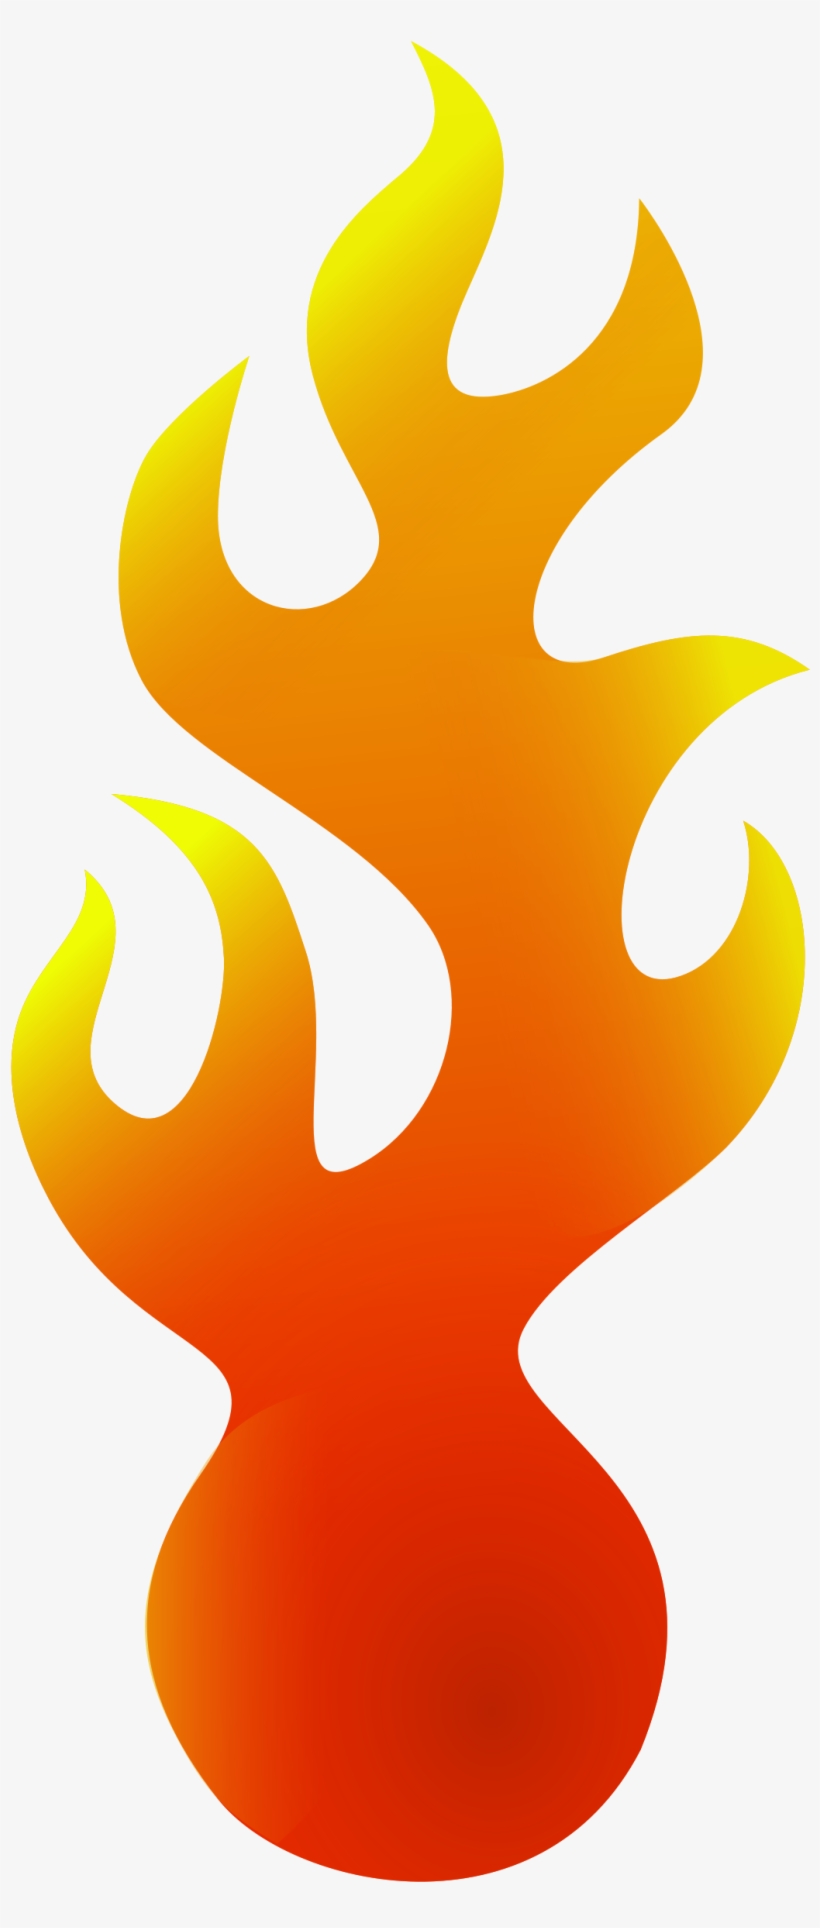 Fire Eagle Logo by Austin Smith on Dribbble